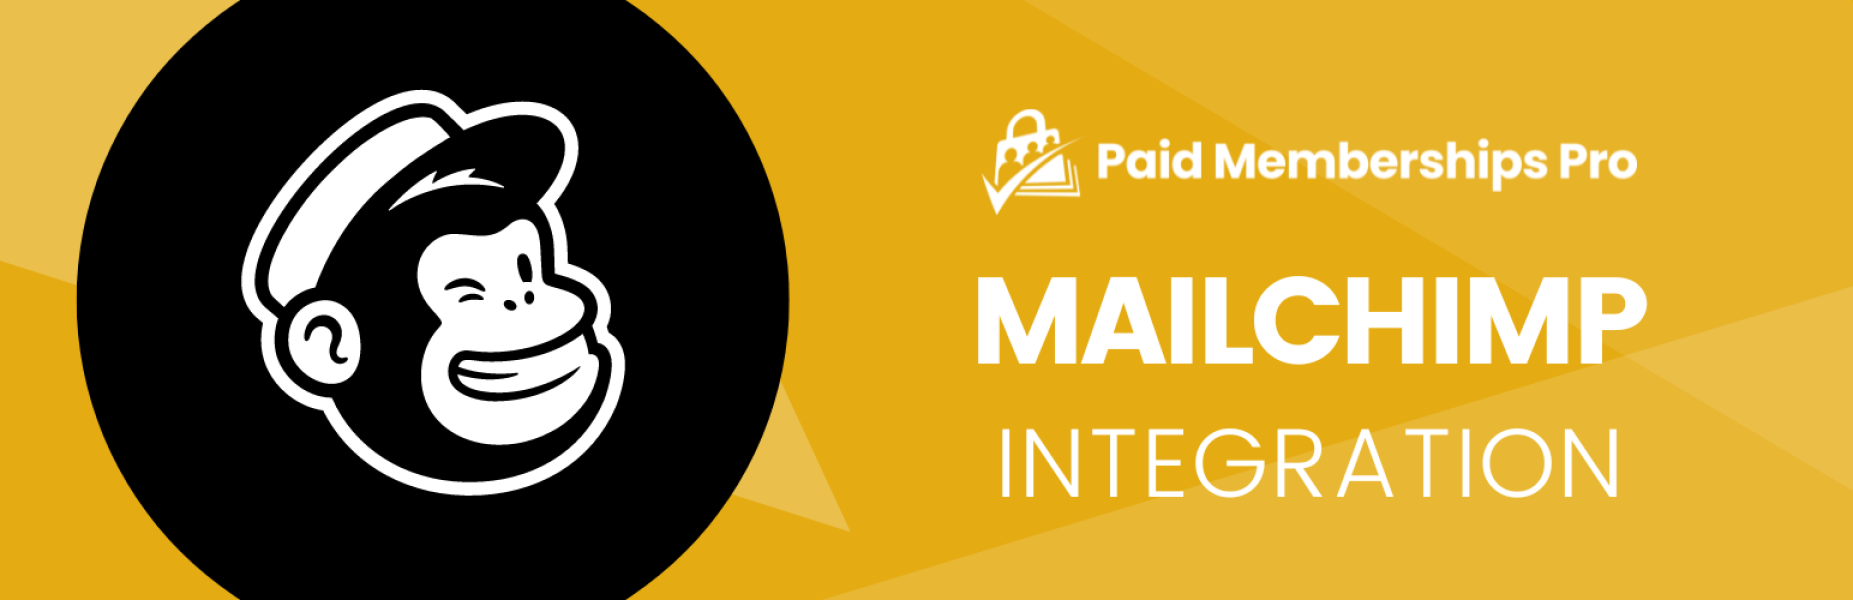 Paid Memberships Pro MailChimp Add On